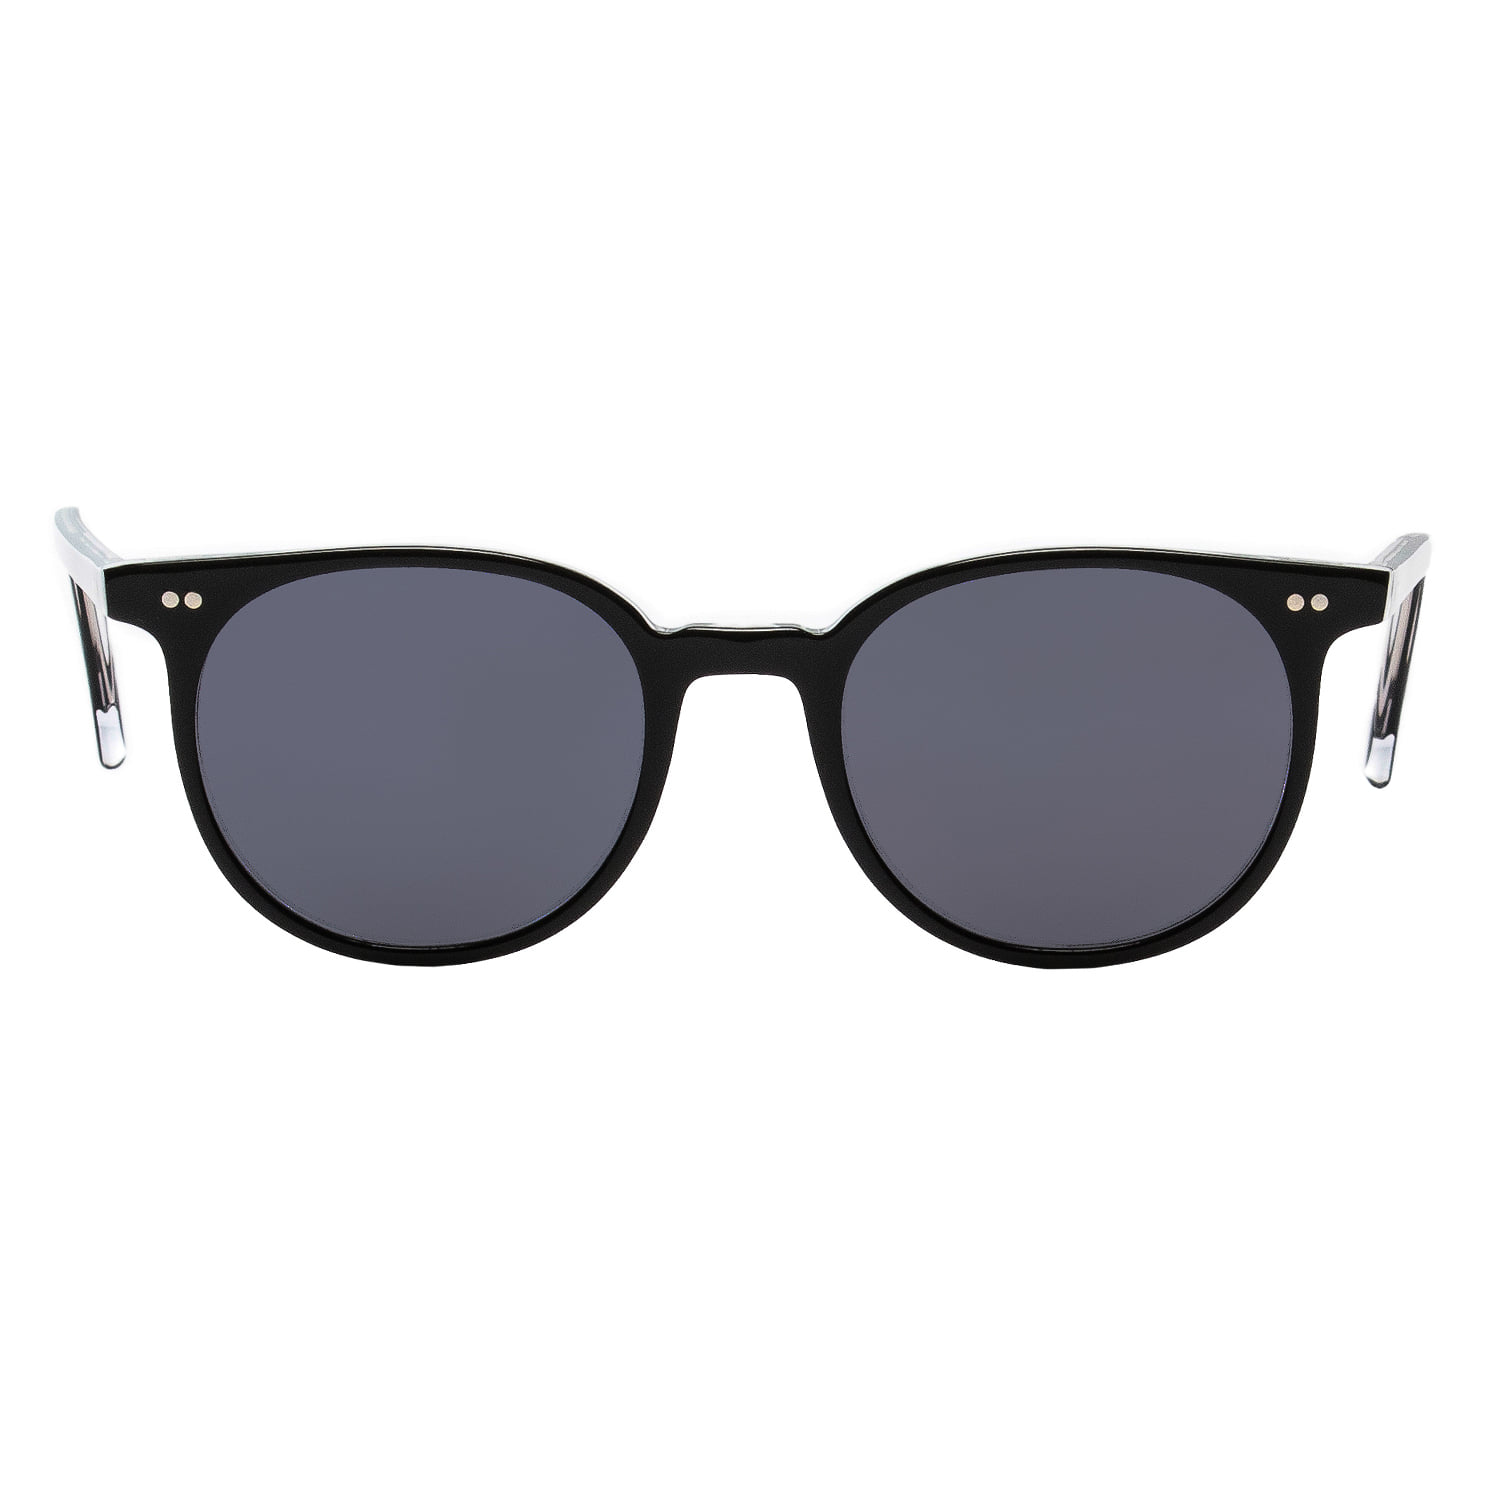 AMBLER Sunglasses - Black Crystal